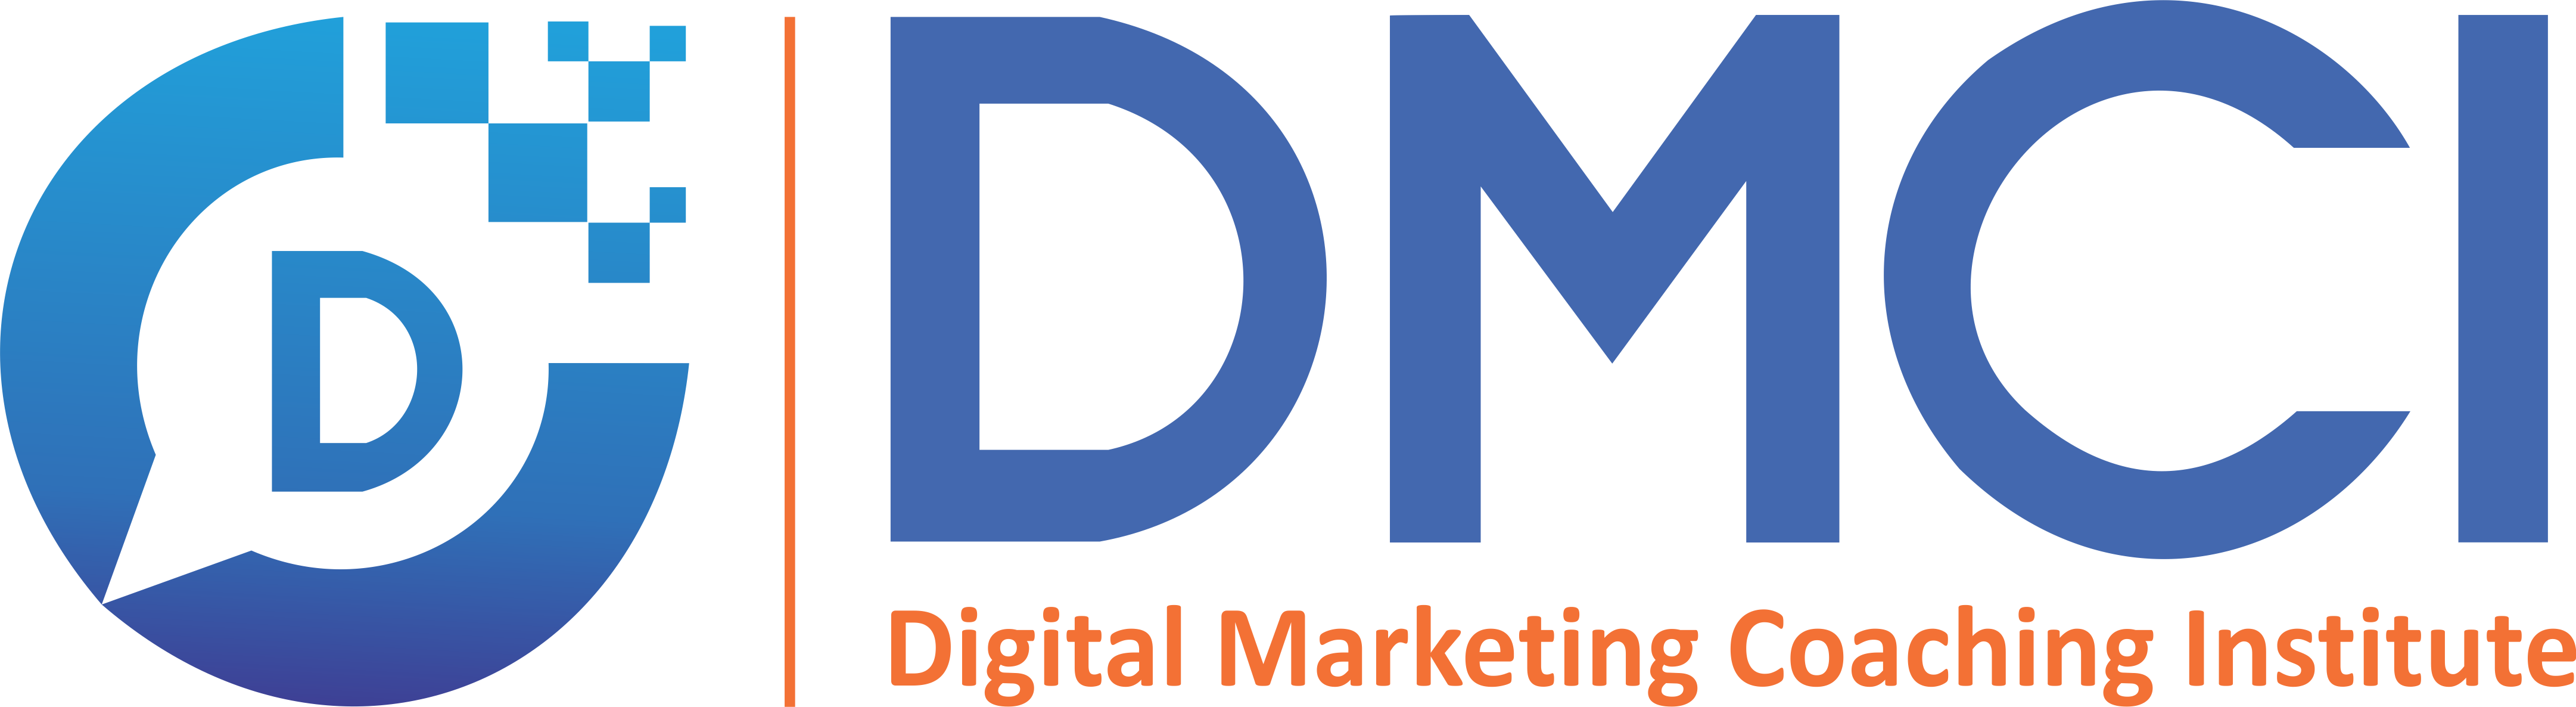 Exclusive Digital Marketing Training Company | Digital Marketing Courses